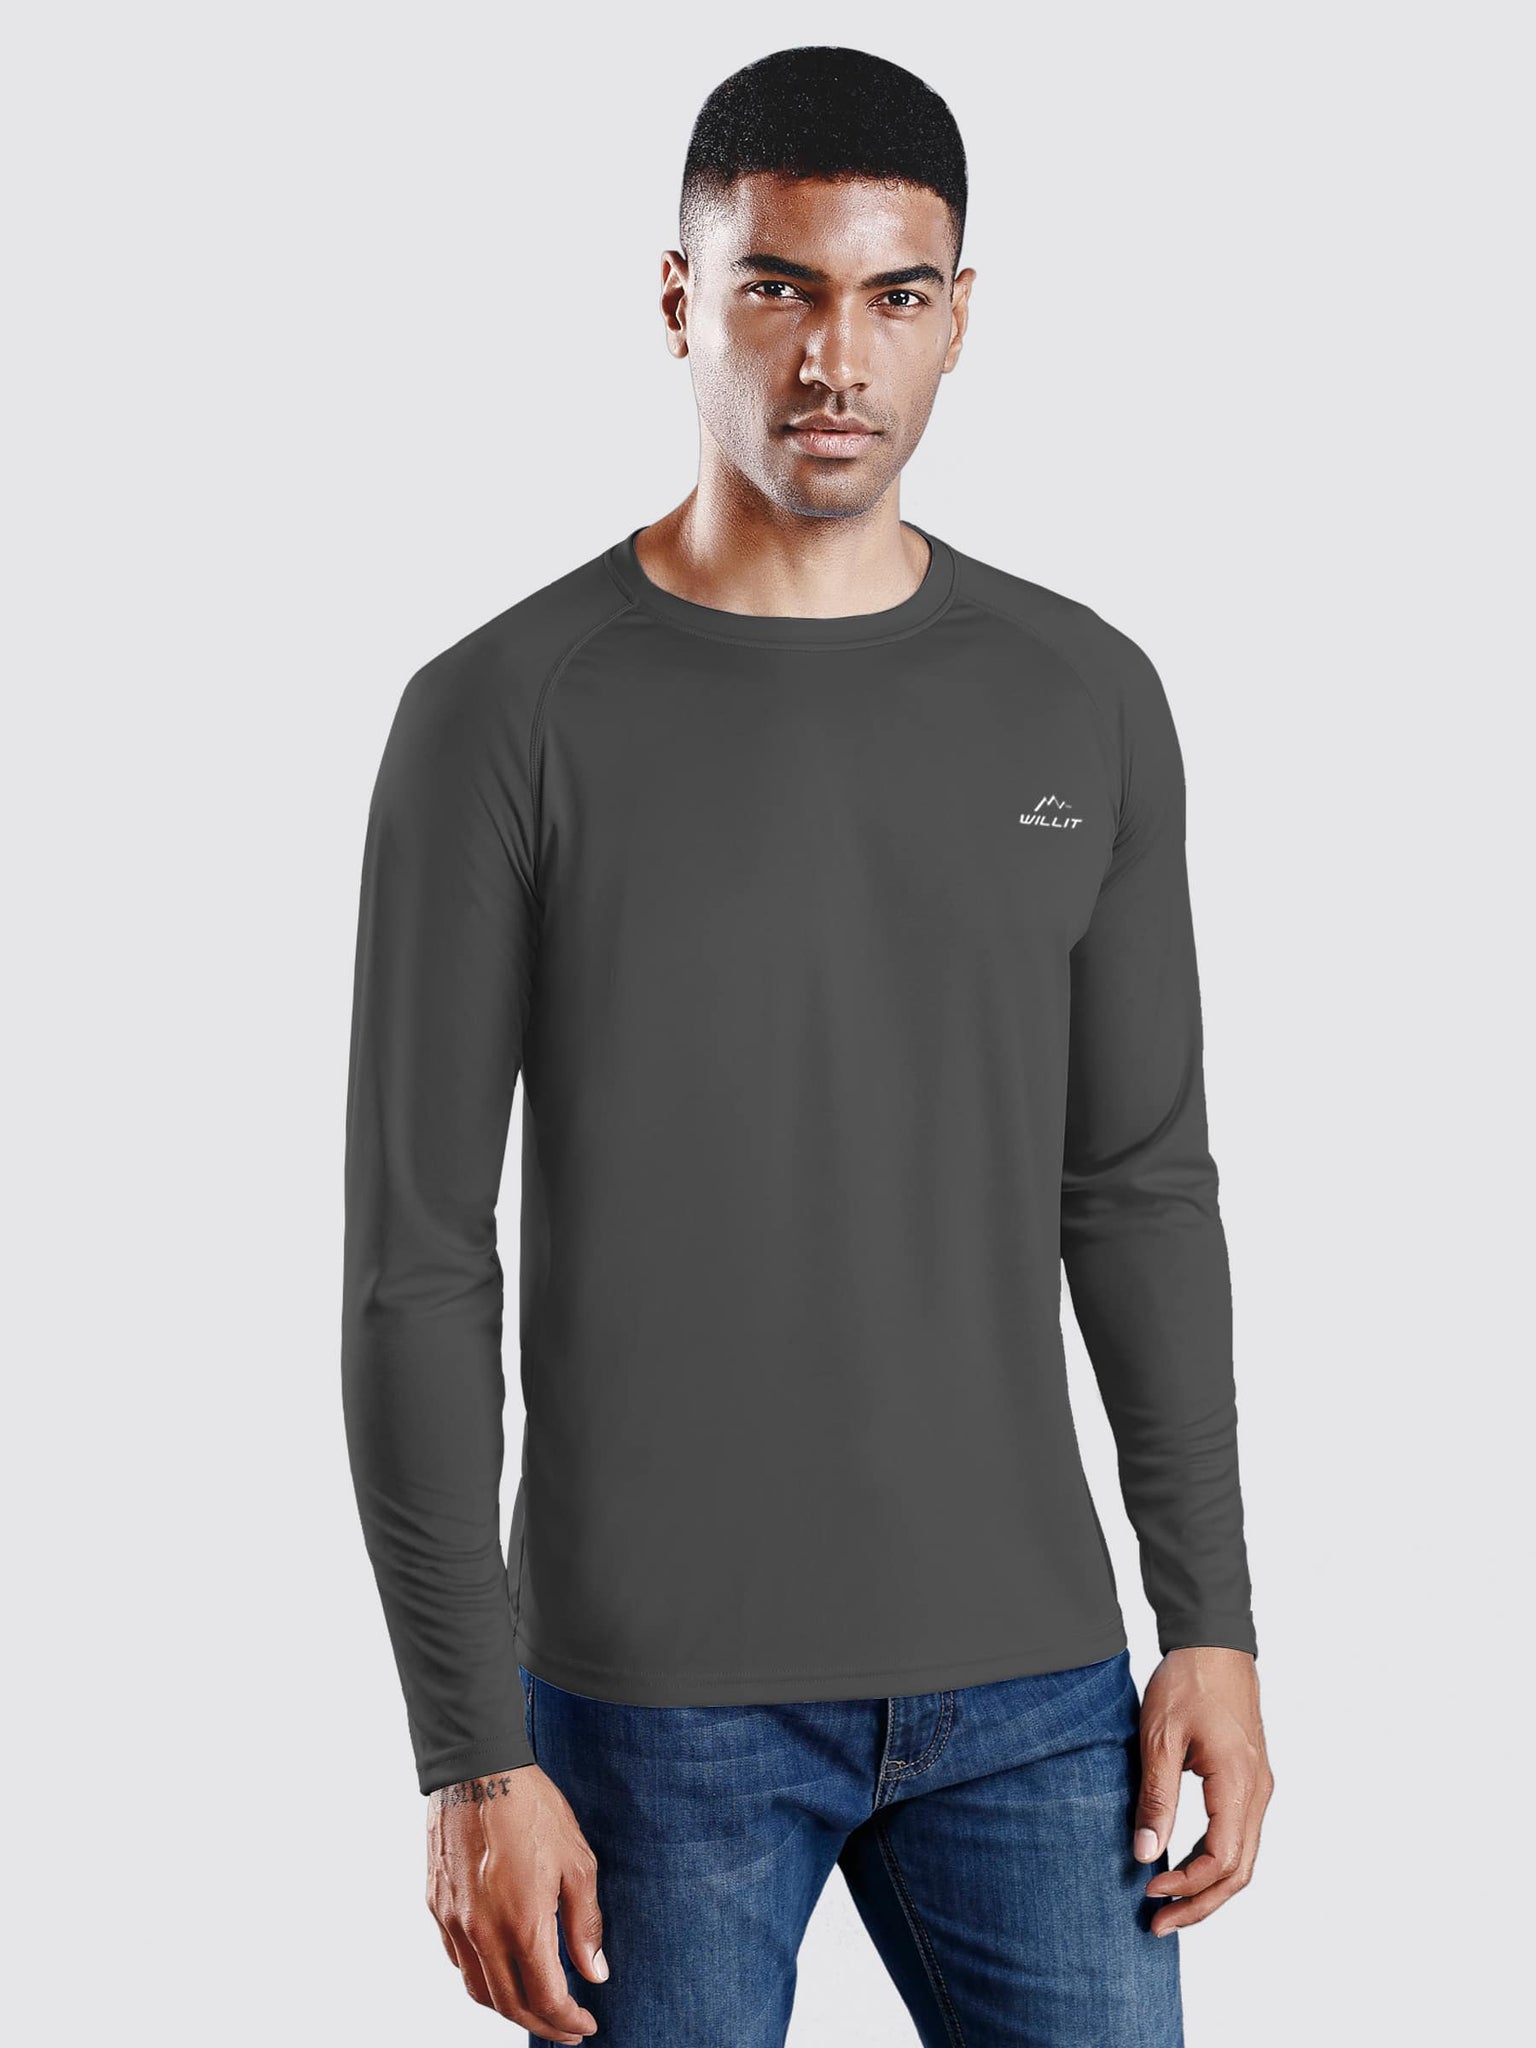 Willit Men's Sun Protection Long Sleeve Shirts_DeepGray_model1